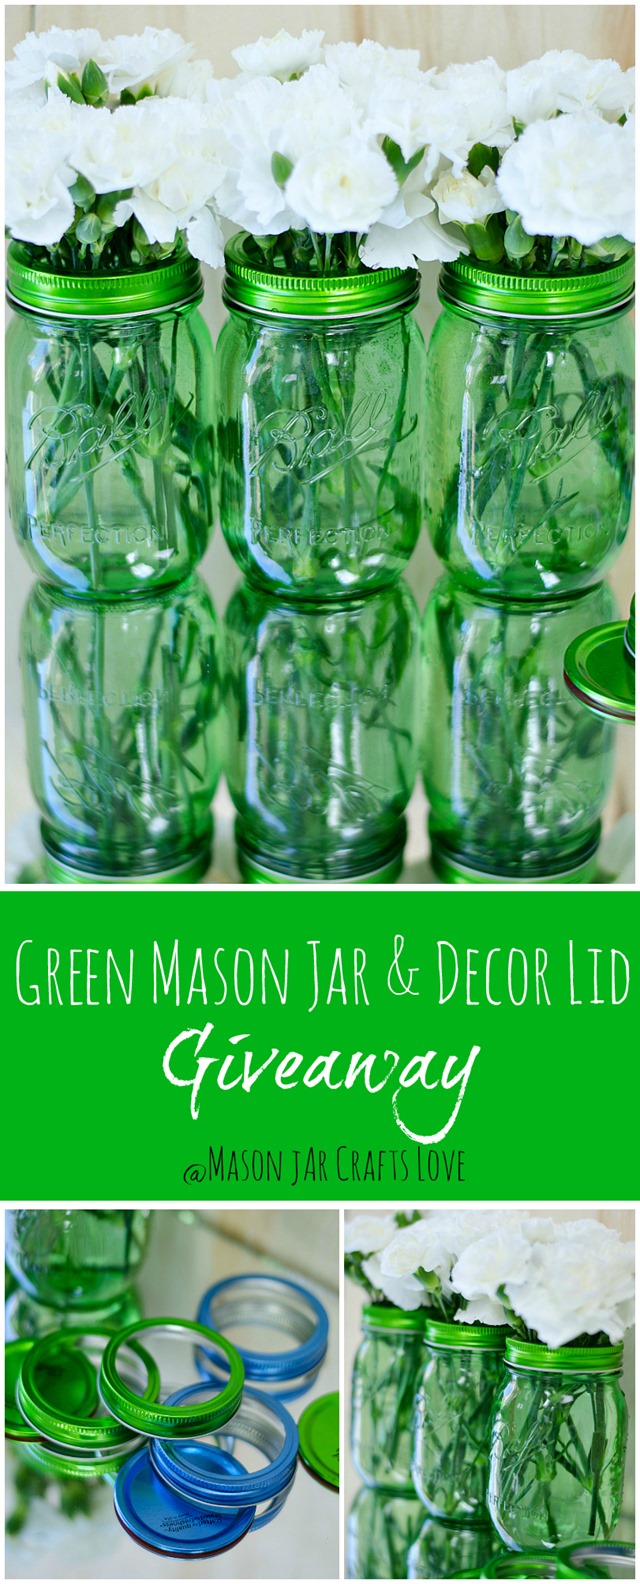 green-mason-jar-giveaway 2